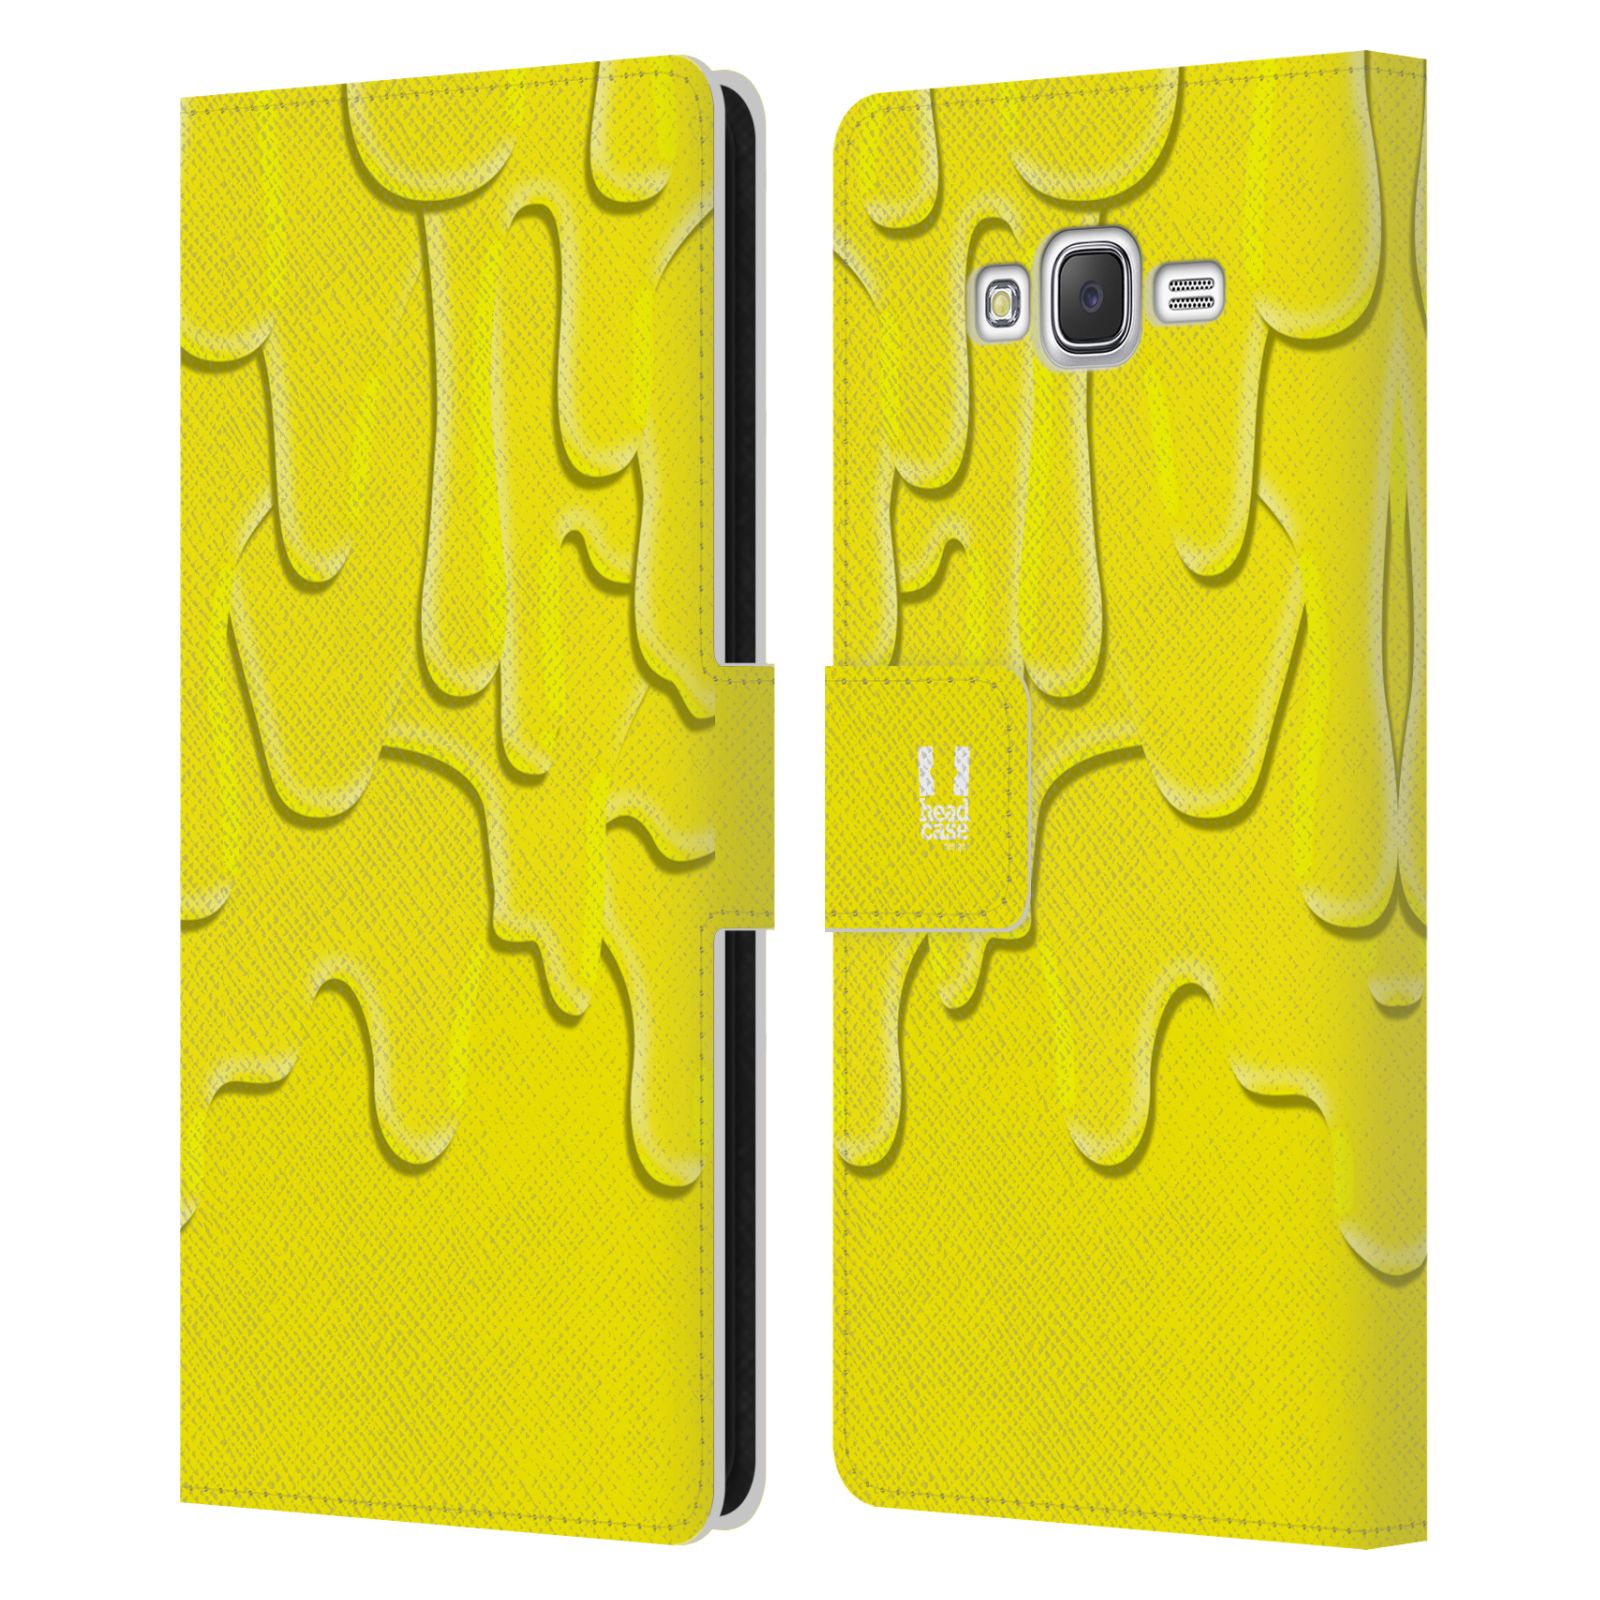 HEAD CASE Flipové pouzdro pro mobil Samsung Galaxy J7, J700 ZÁPLAVA BARVA žlutá